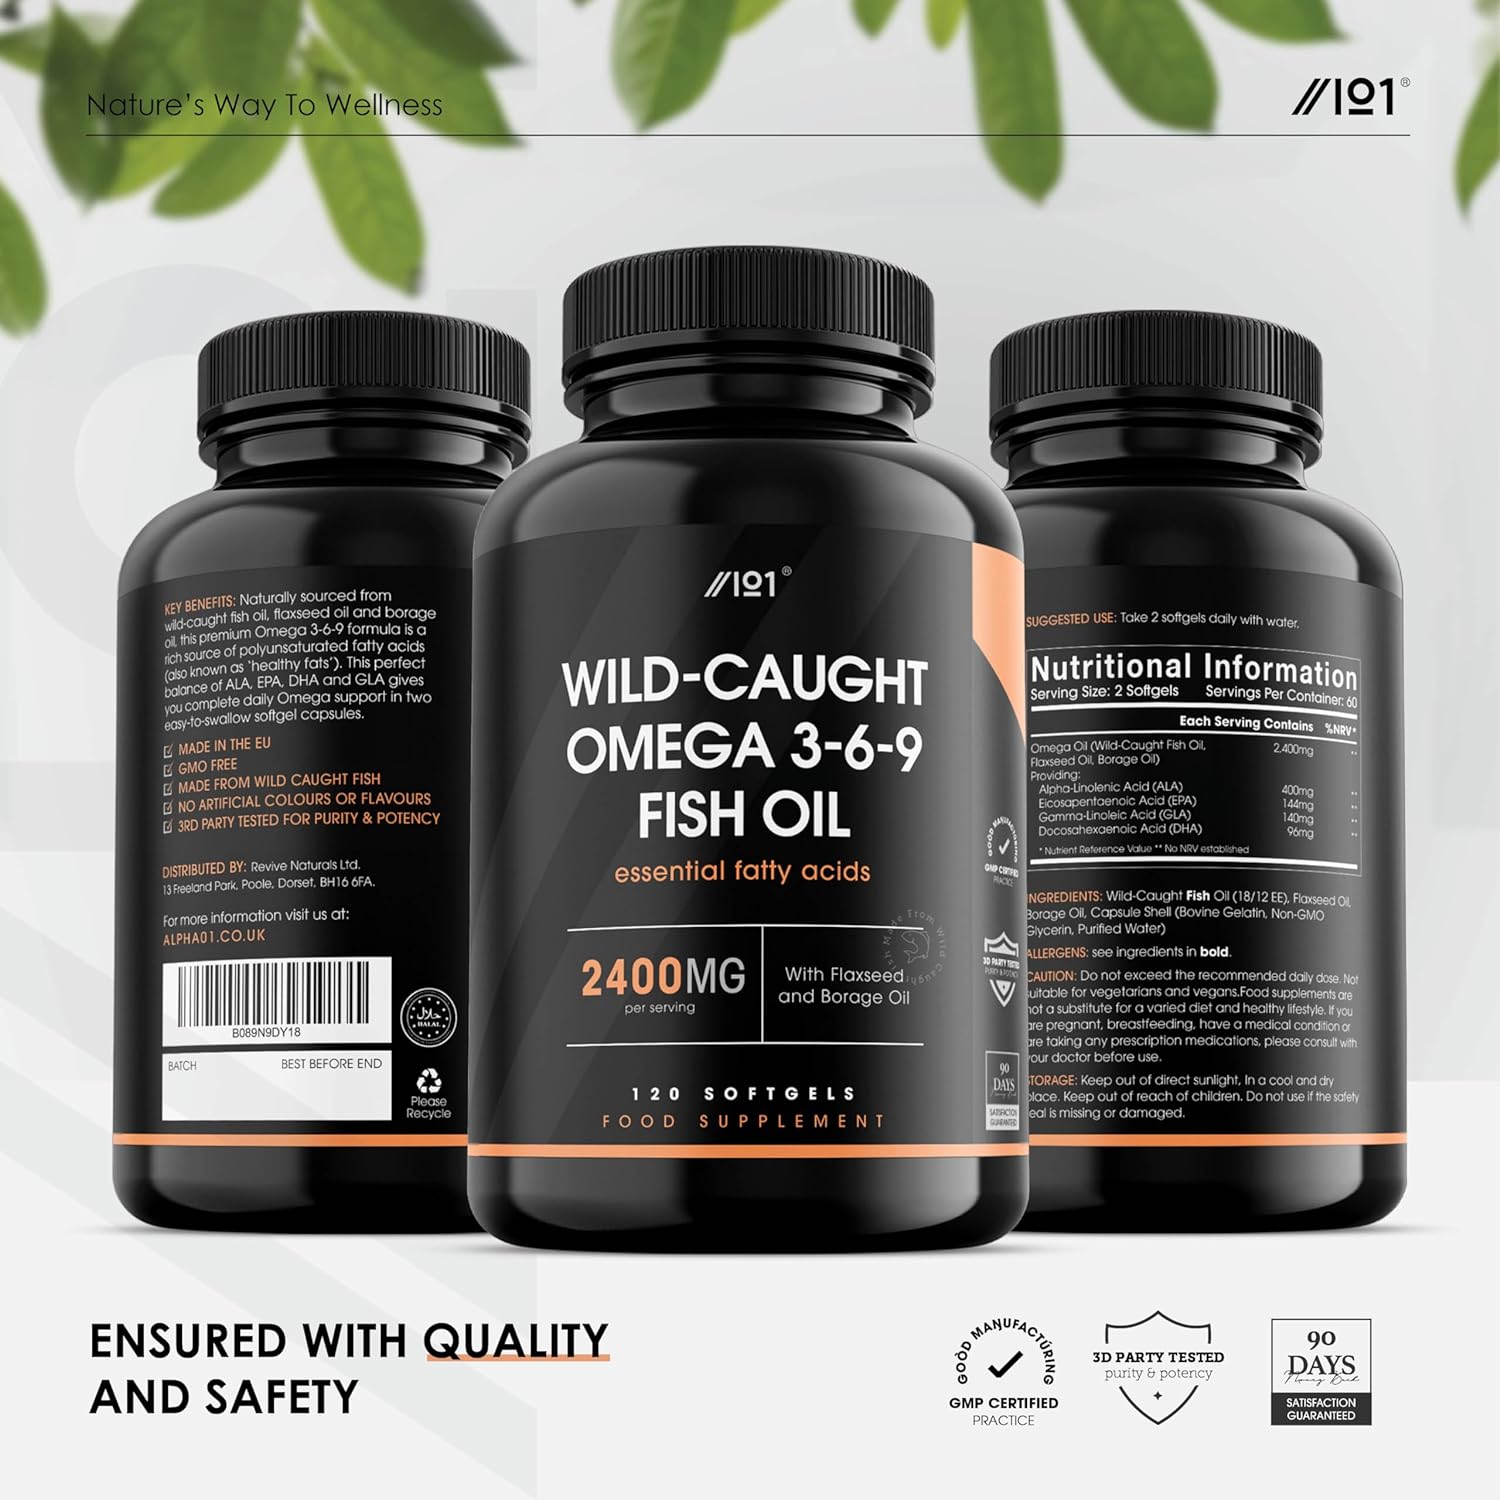 Omega 3-6-9 Fish Oil 2400mg - Wild-Caught - with Flax Oil & Borage Oil